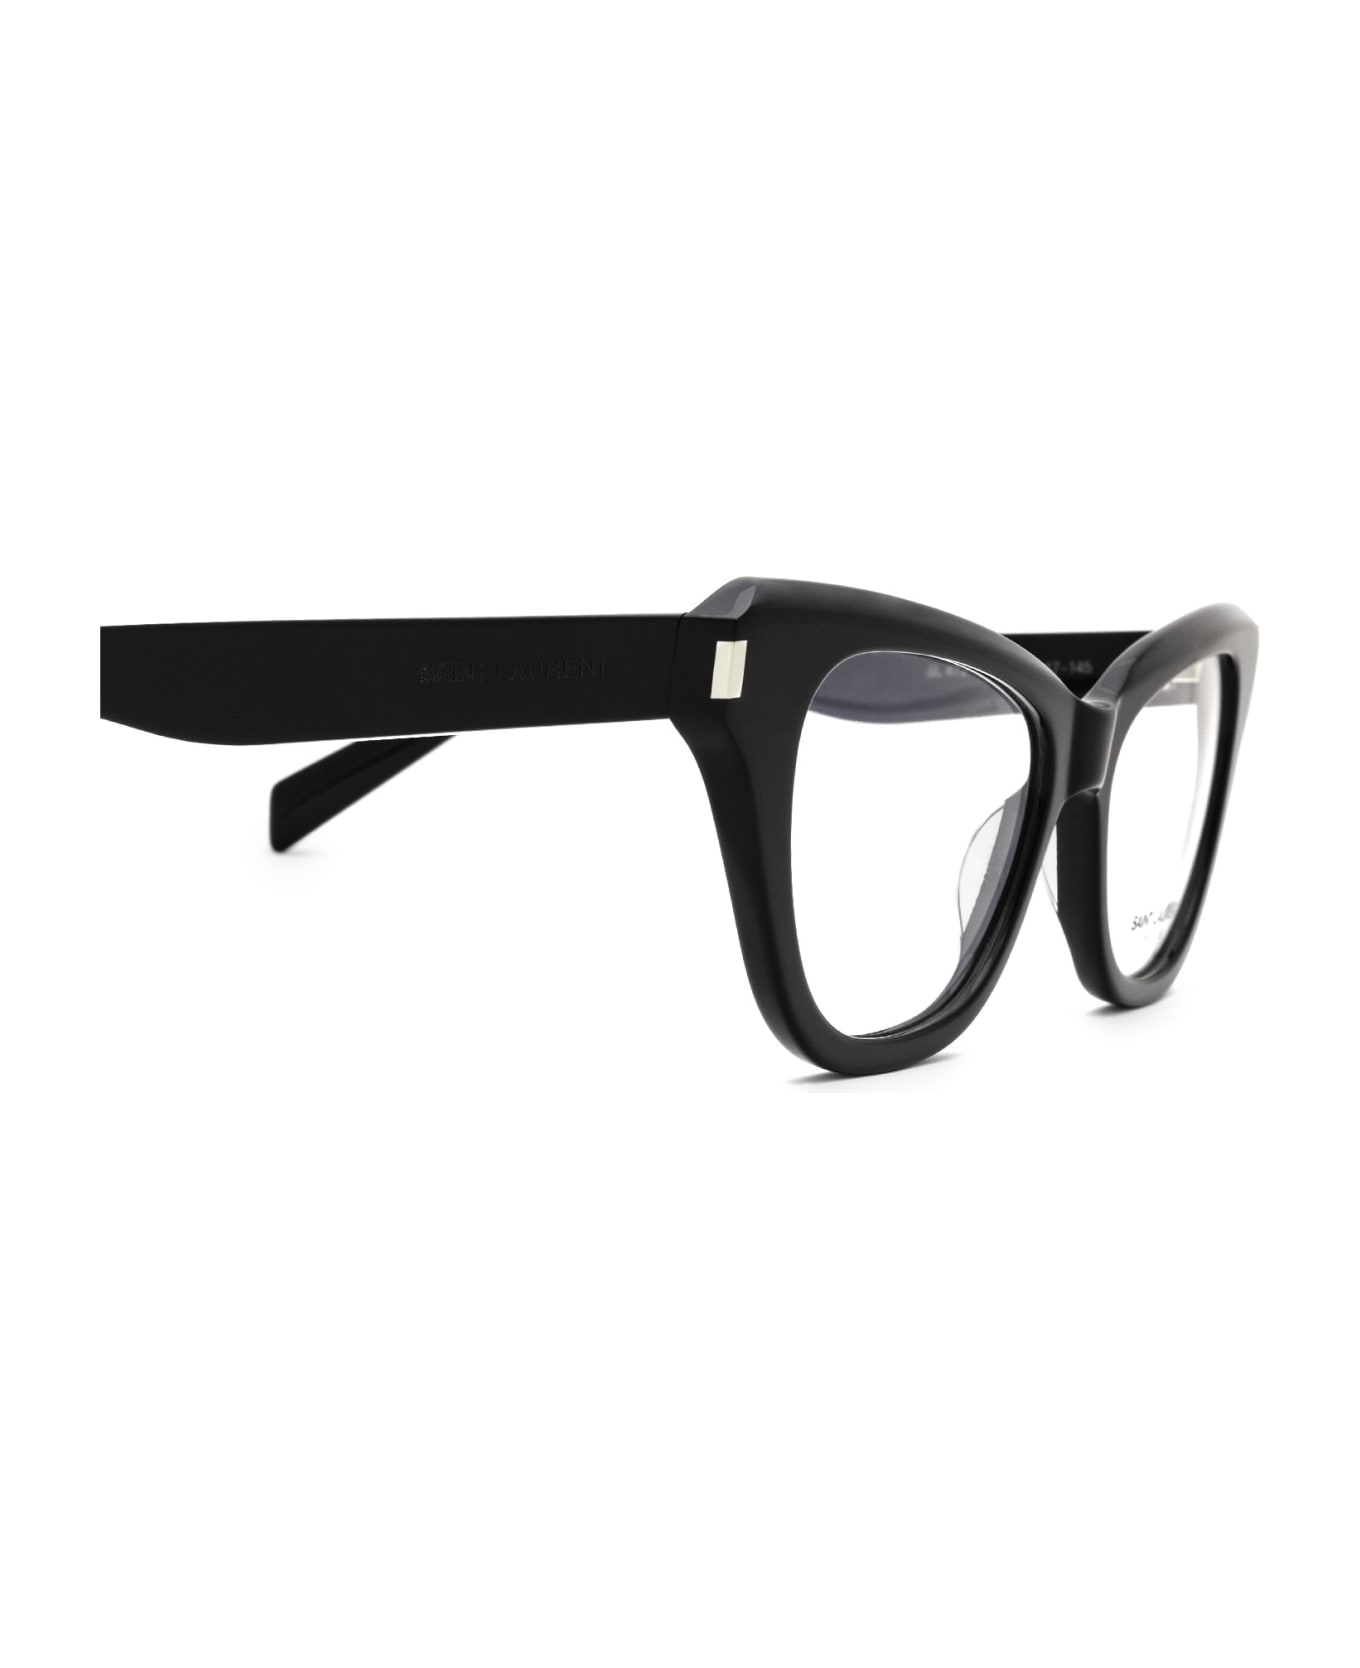 Saint Laurent Eyewear Sl 472 Black Glasses - Black